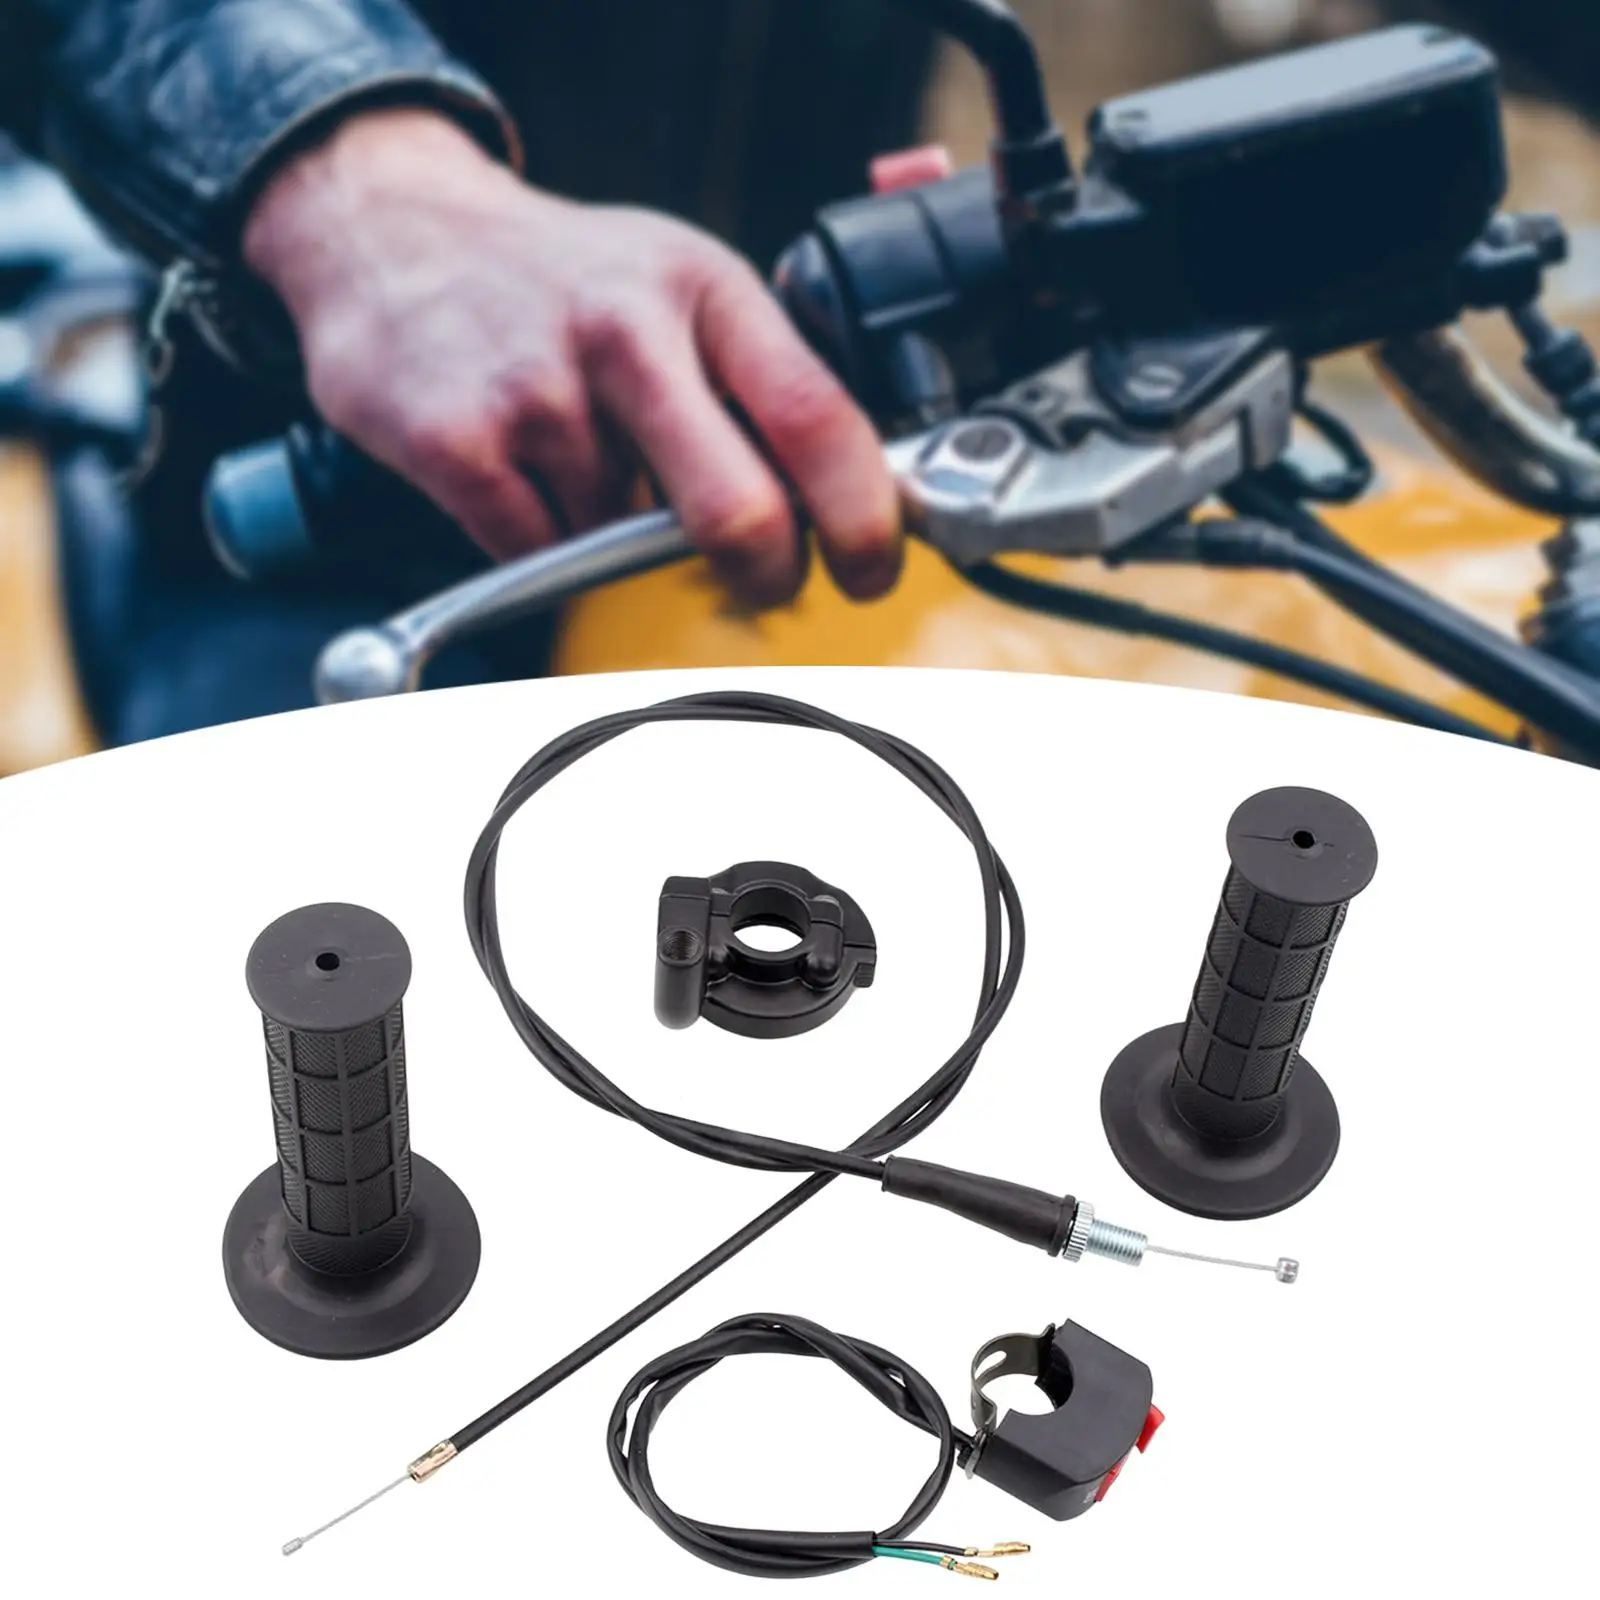 Throttle Accelerator Handle Grips Cable Set for 50cc 150cc 250cc Mini Bike Professional